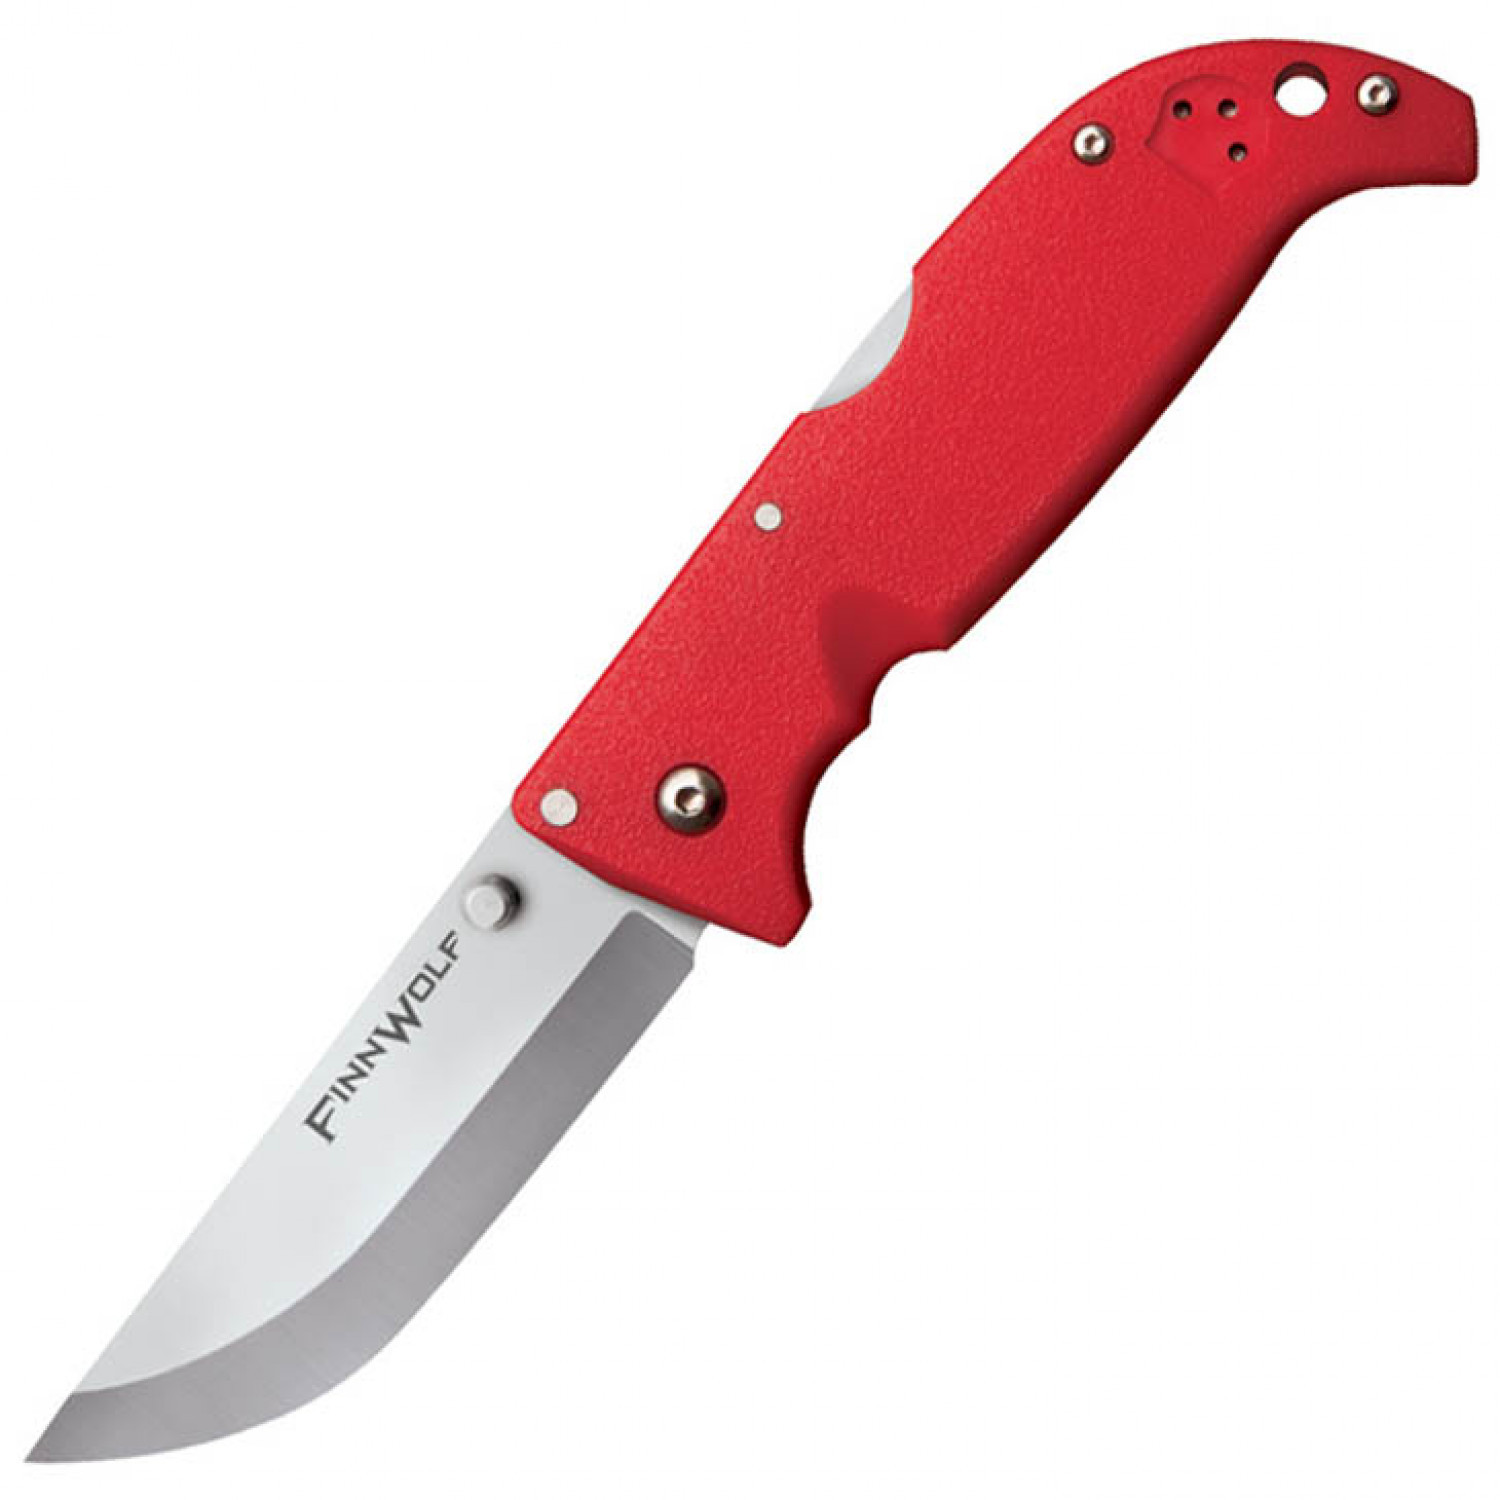 Складной нож Finn Wolf (Red) - Cold Steel 20NPRDZ, сталь AUS 8A, рукоять Grivory® (пластик) - фото 2